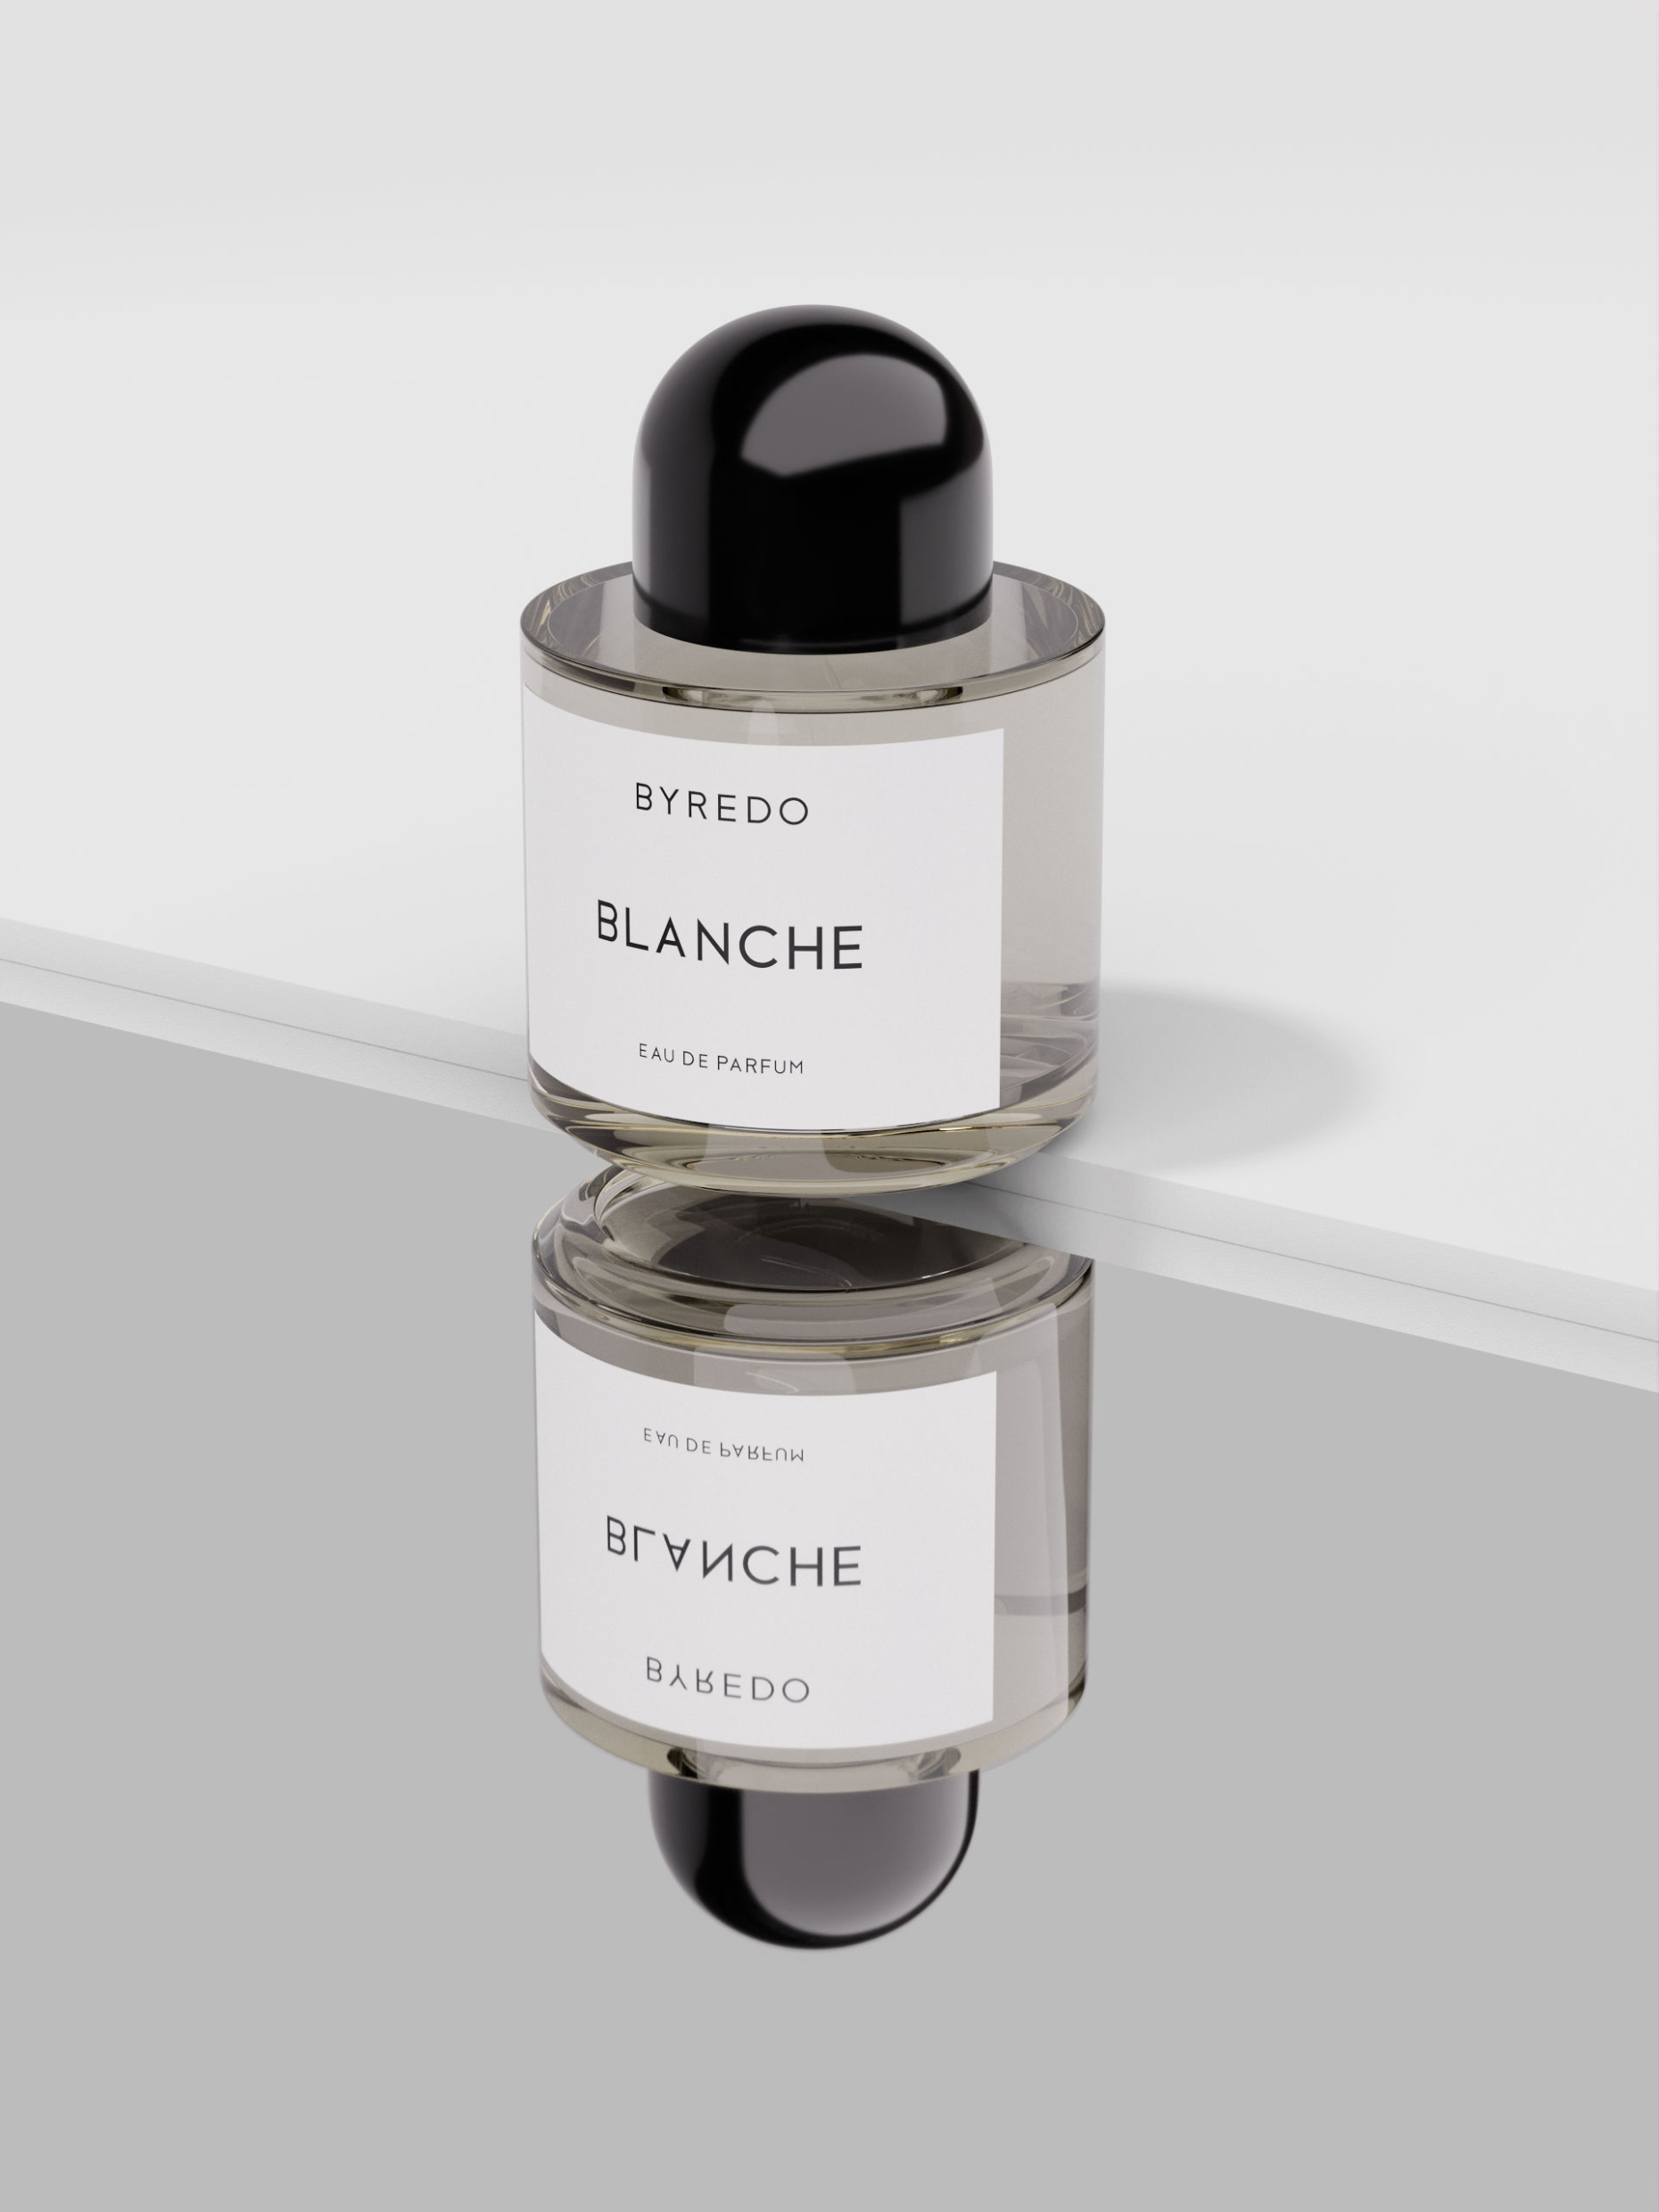 8 Byredo Blanche V1 1 - Byredo Blanche Eau De Parfum CGI - Sonny Nguyen